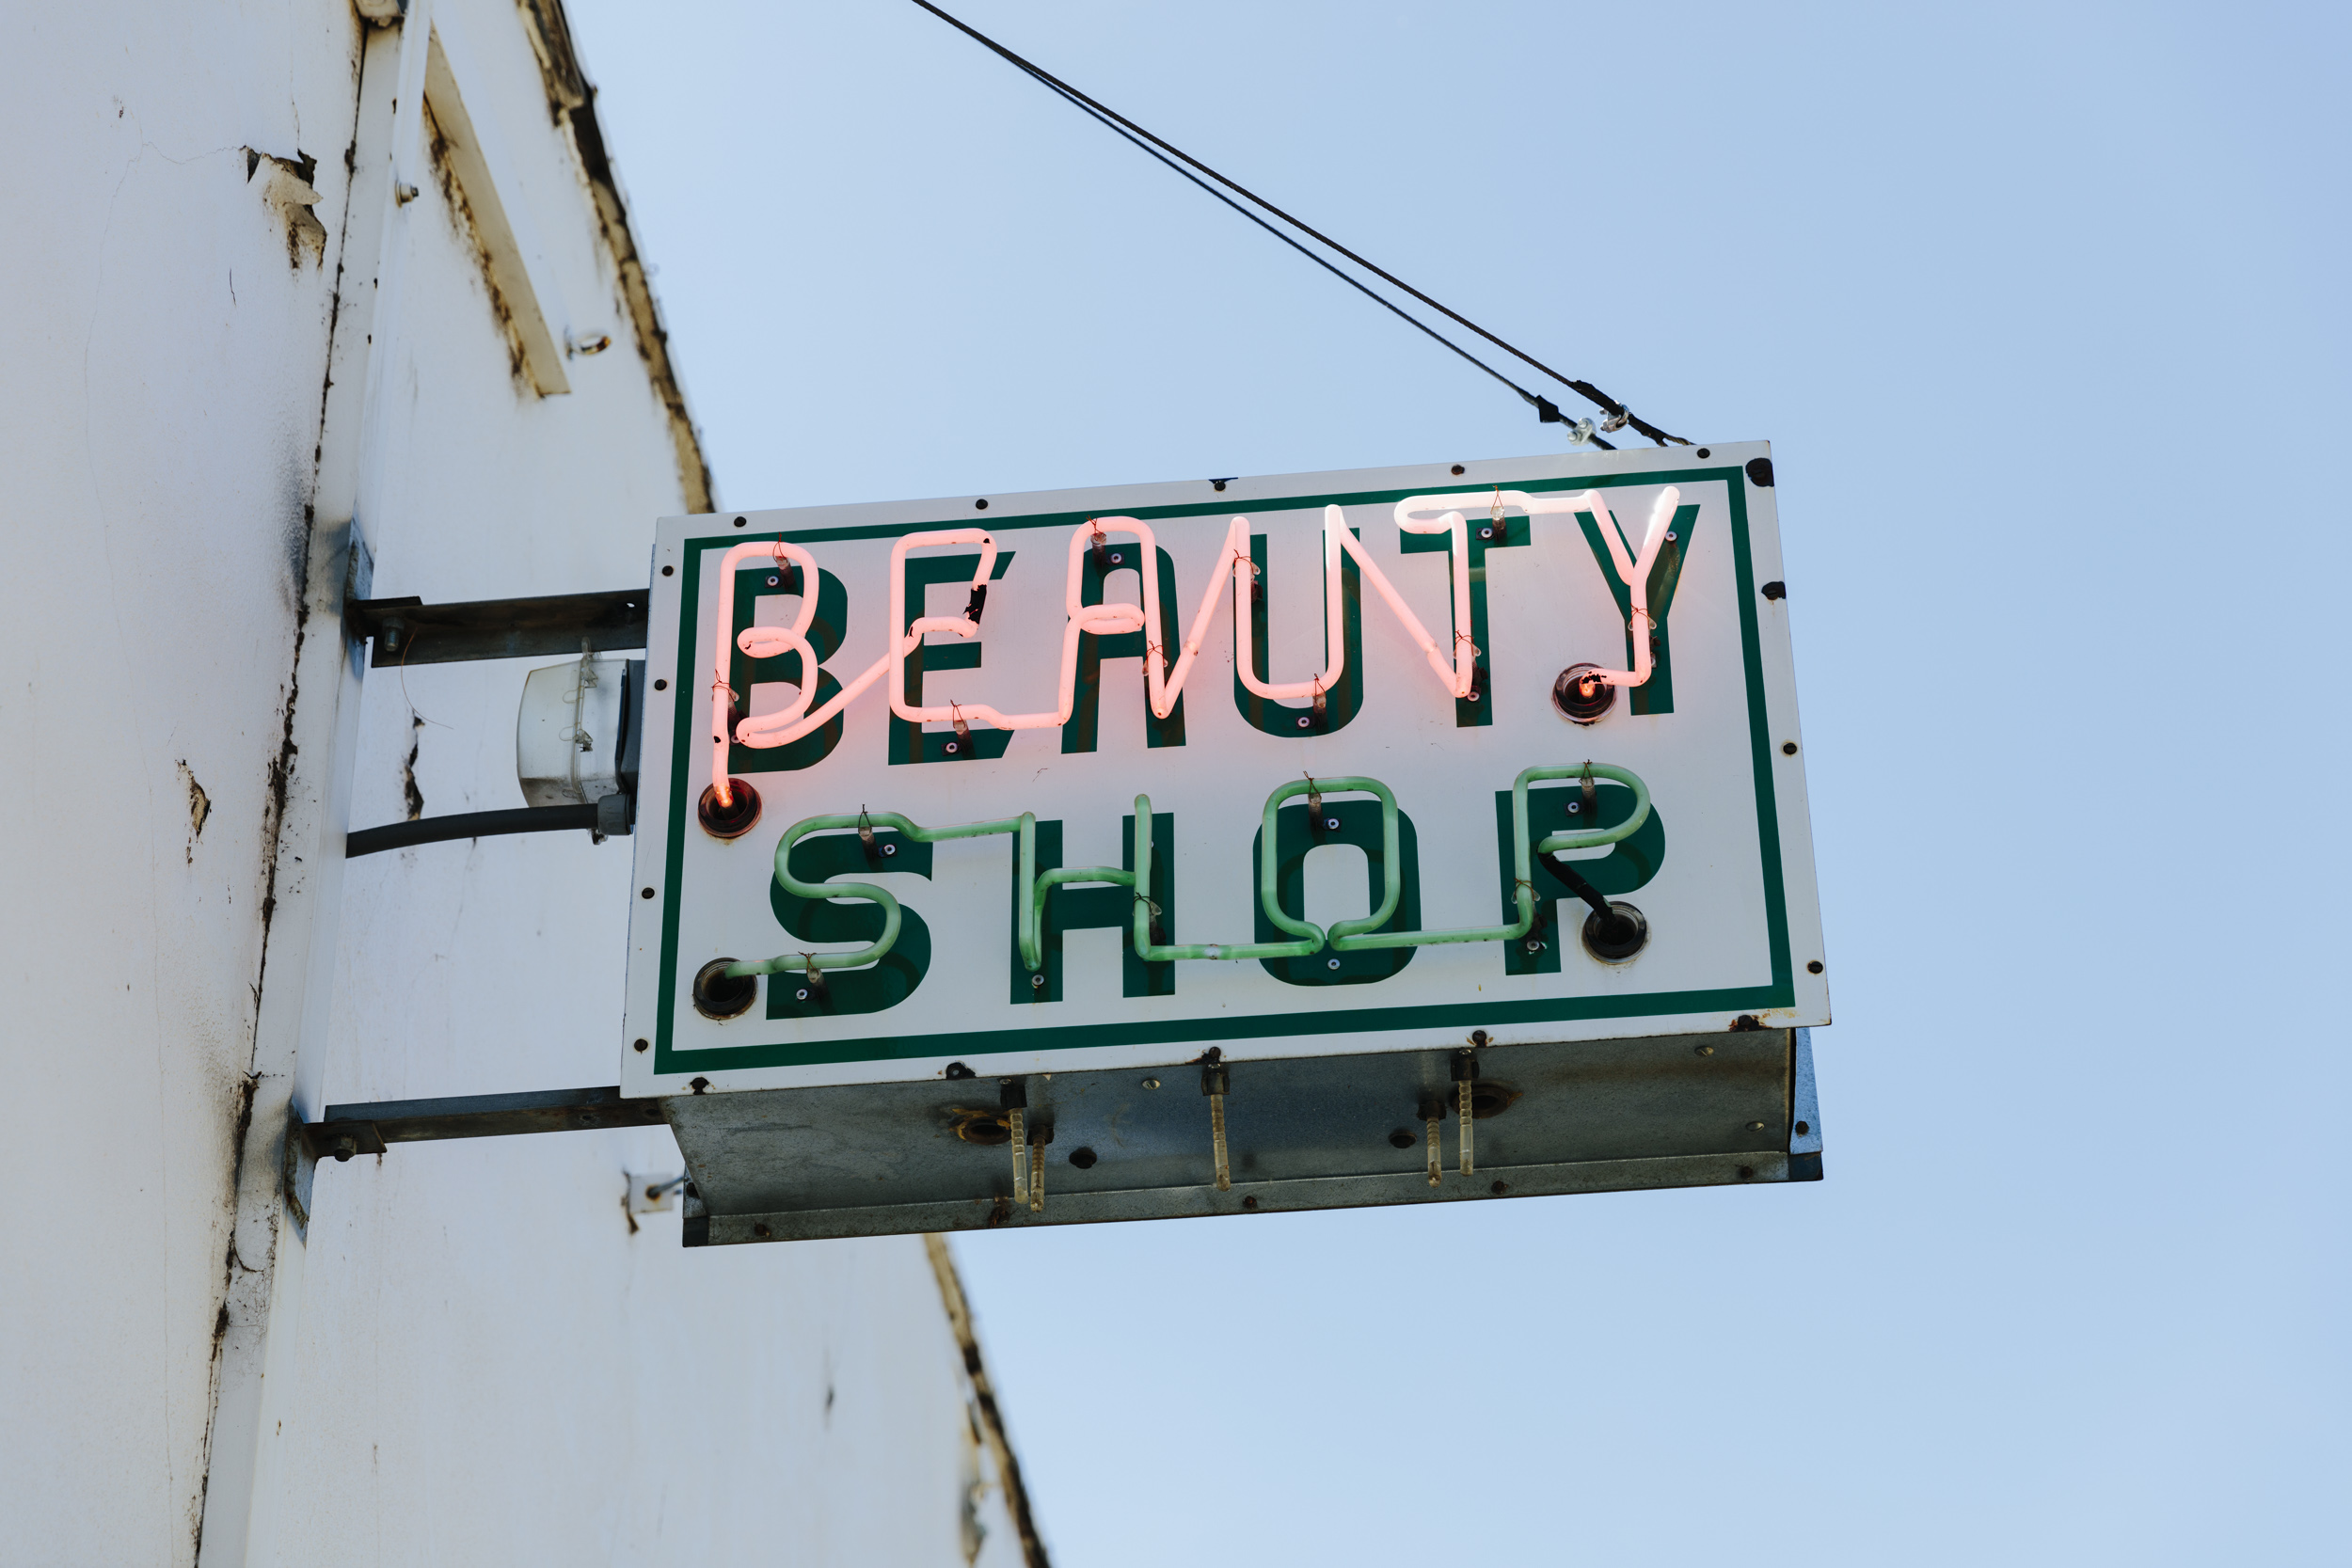 Beauty Shop, Pomeroy, WA, 2021